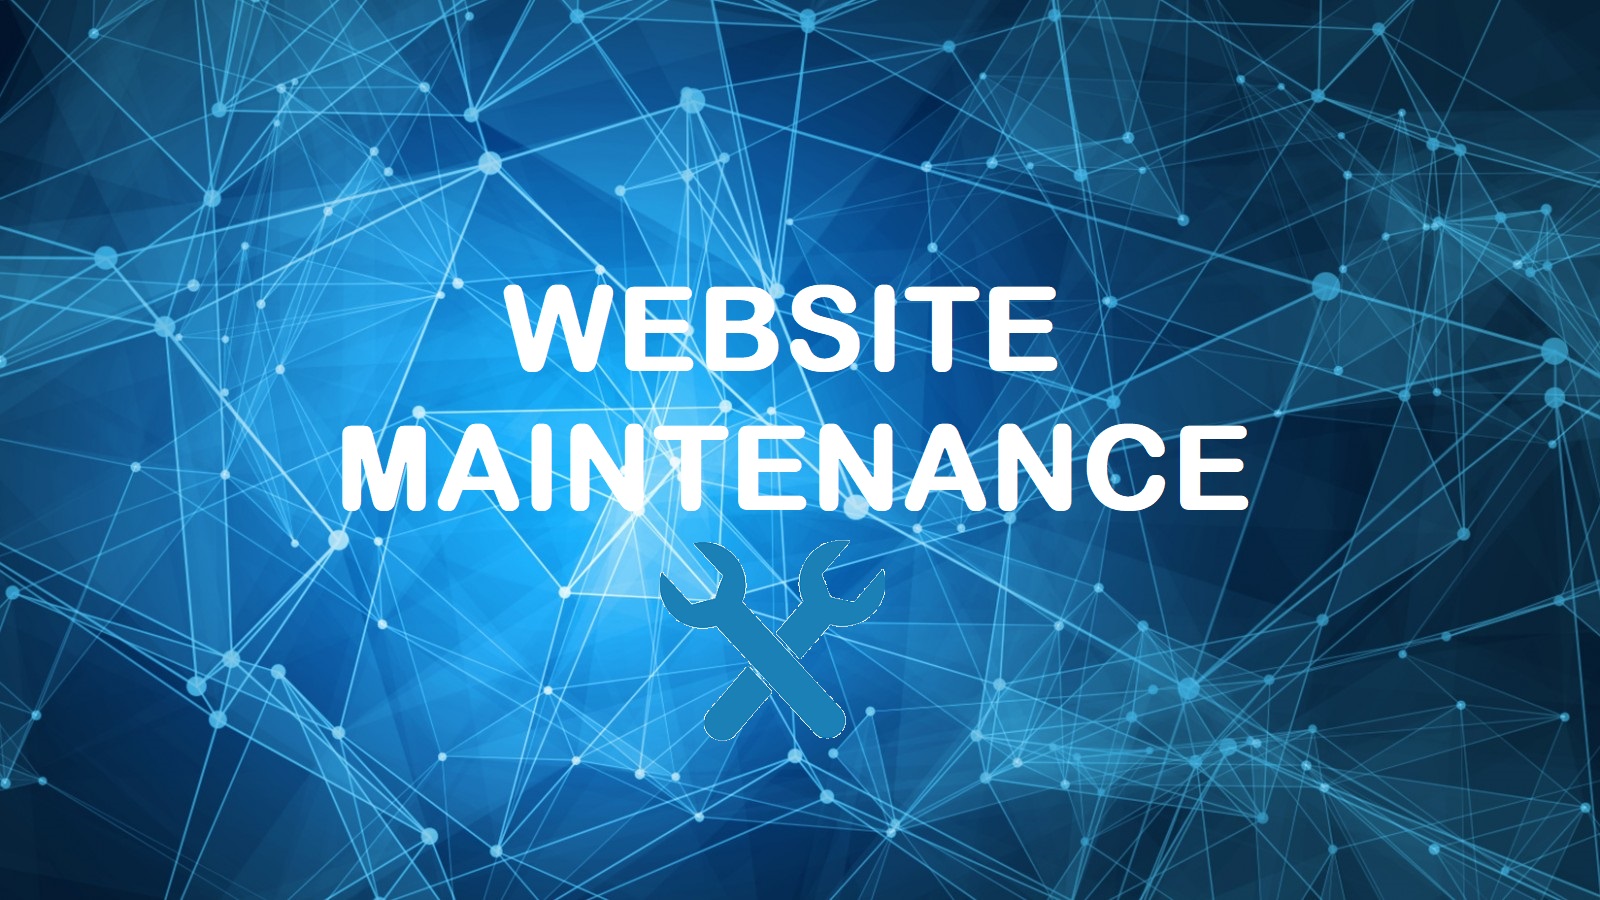 Cost of Website Maintenance in Nigeria